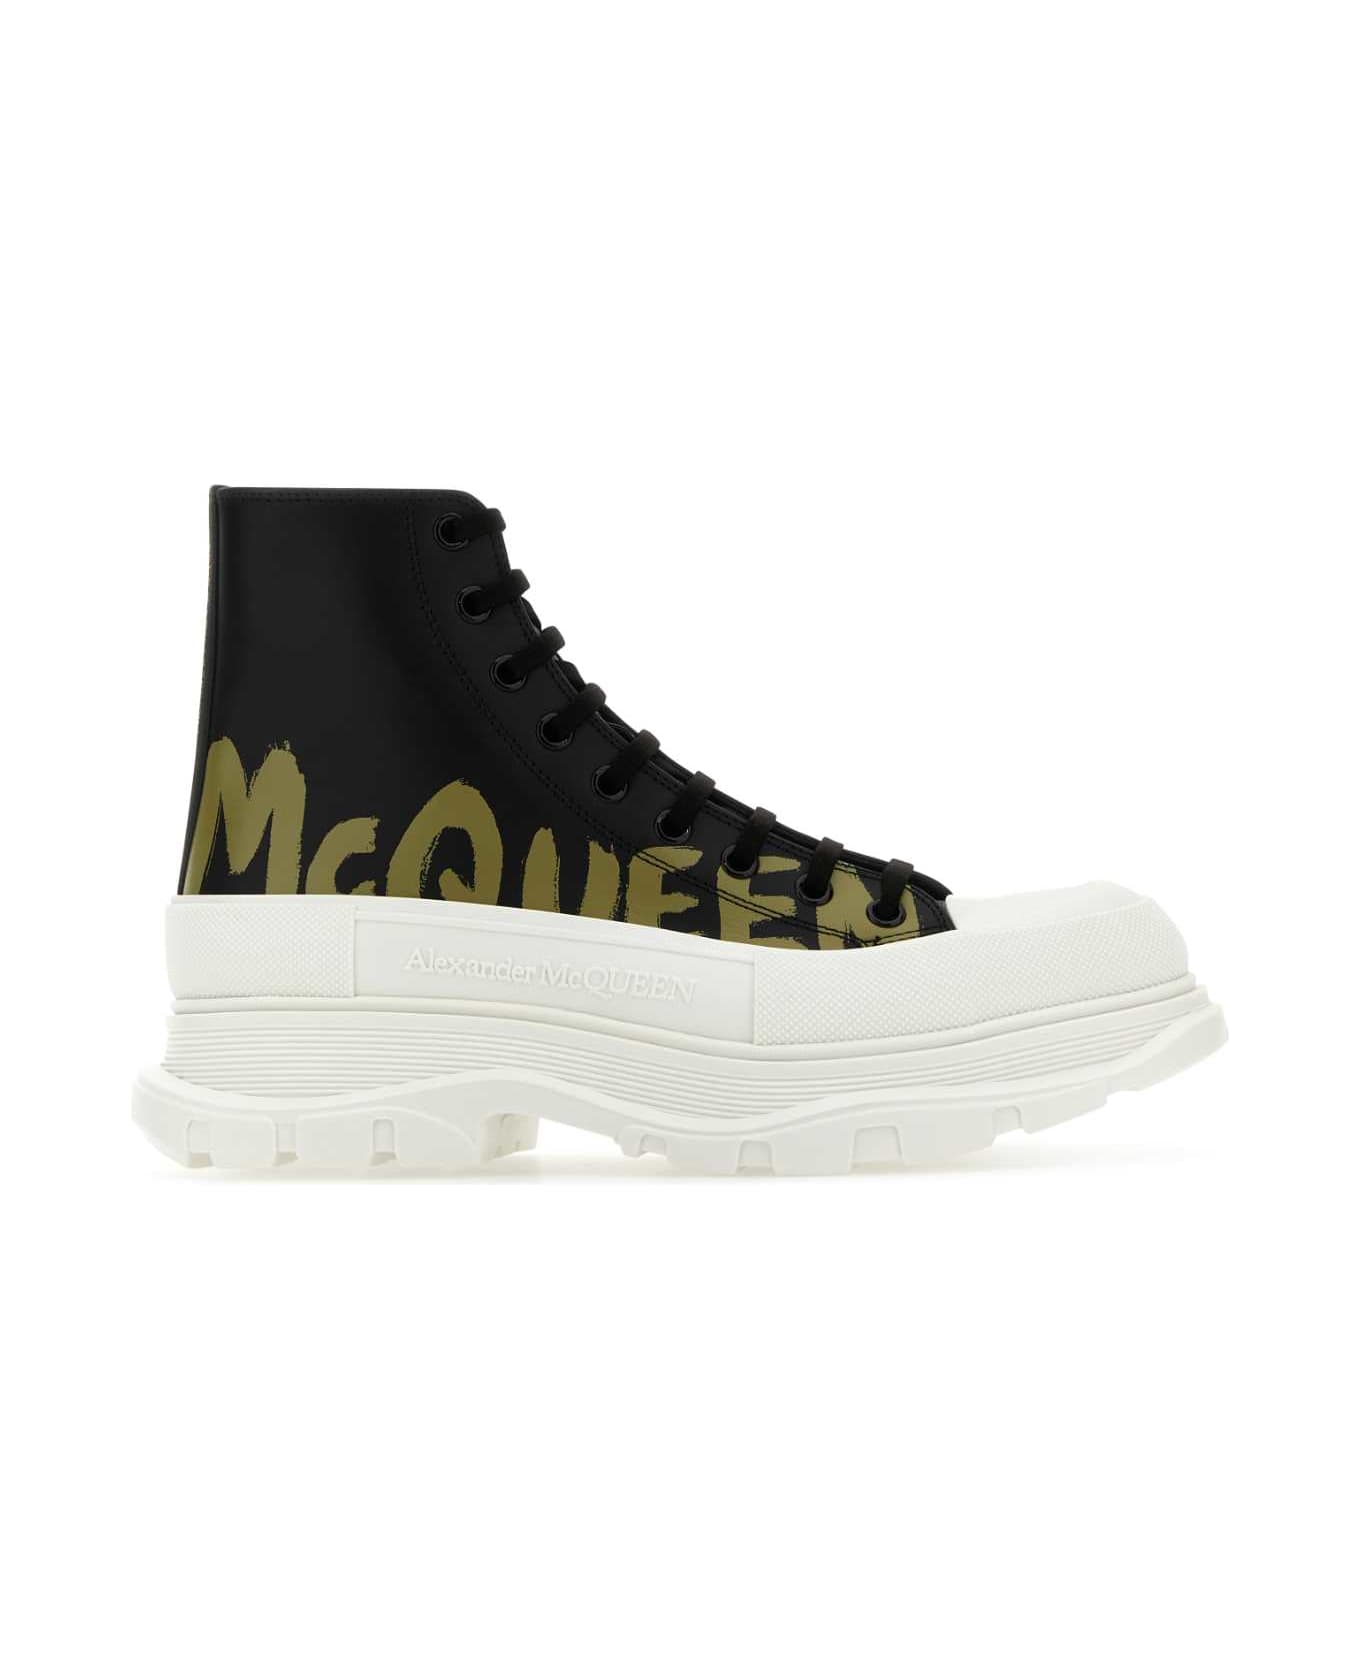 Alexander McQueen Black Leather Tread Slick Sneakers - BLKOFWHPALEKHAKI